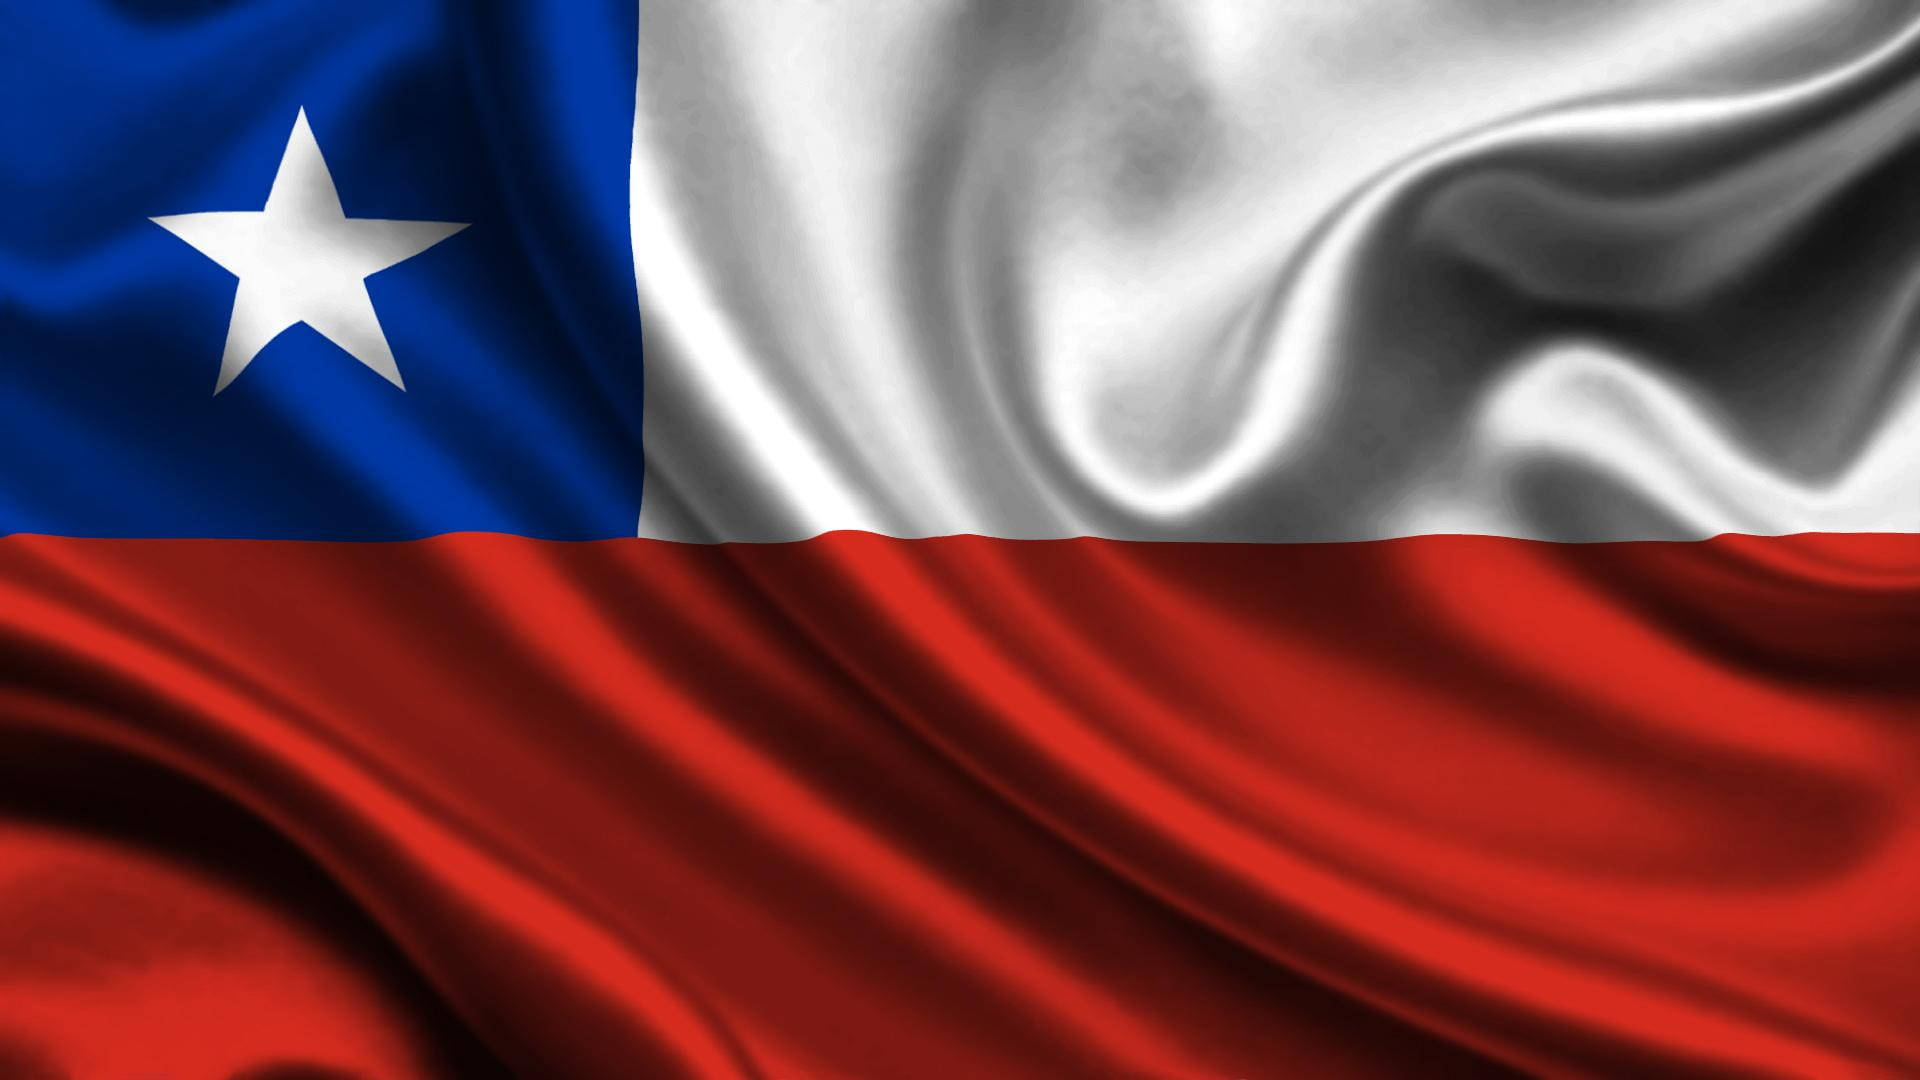 Chile National Flag Wallpaper